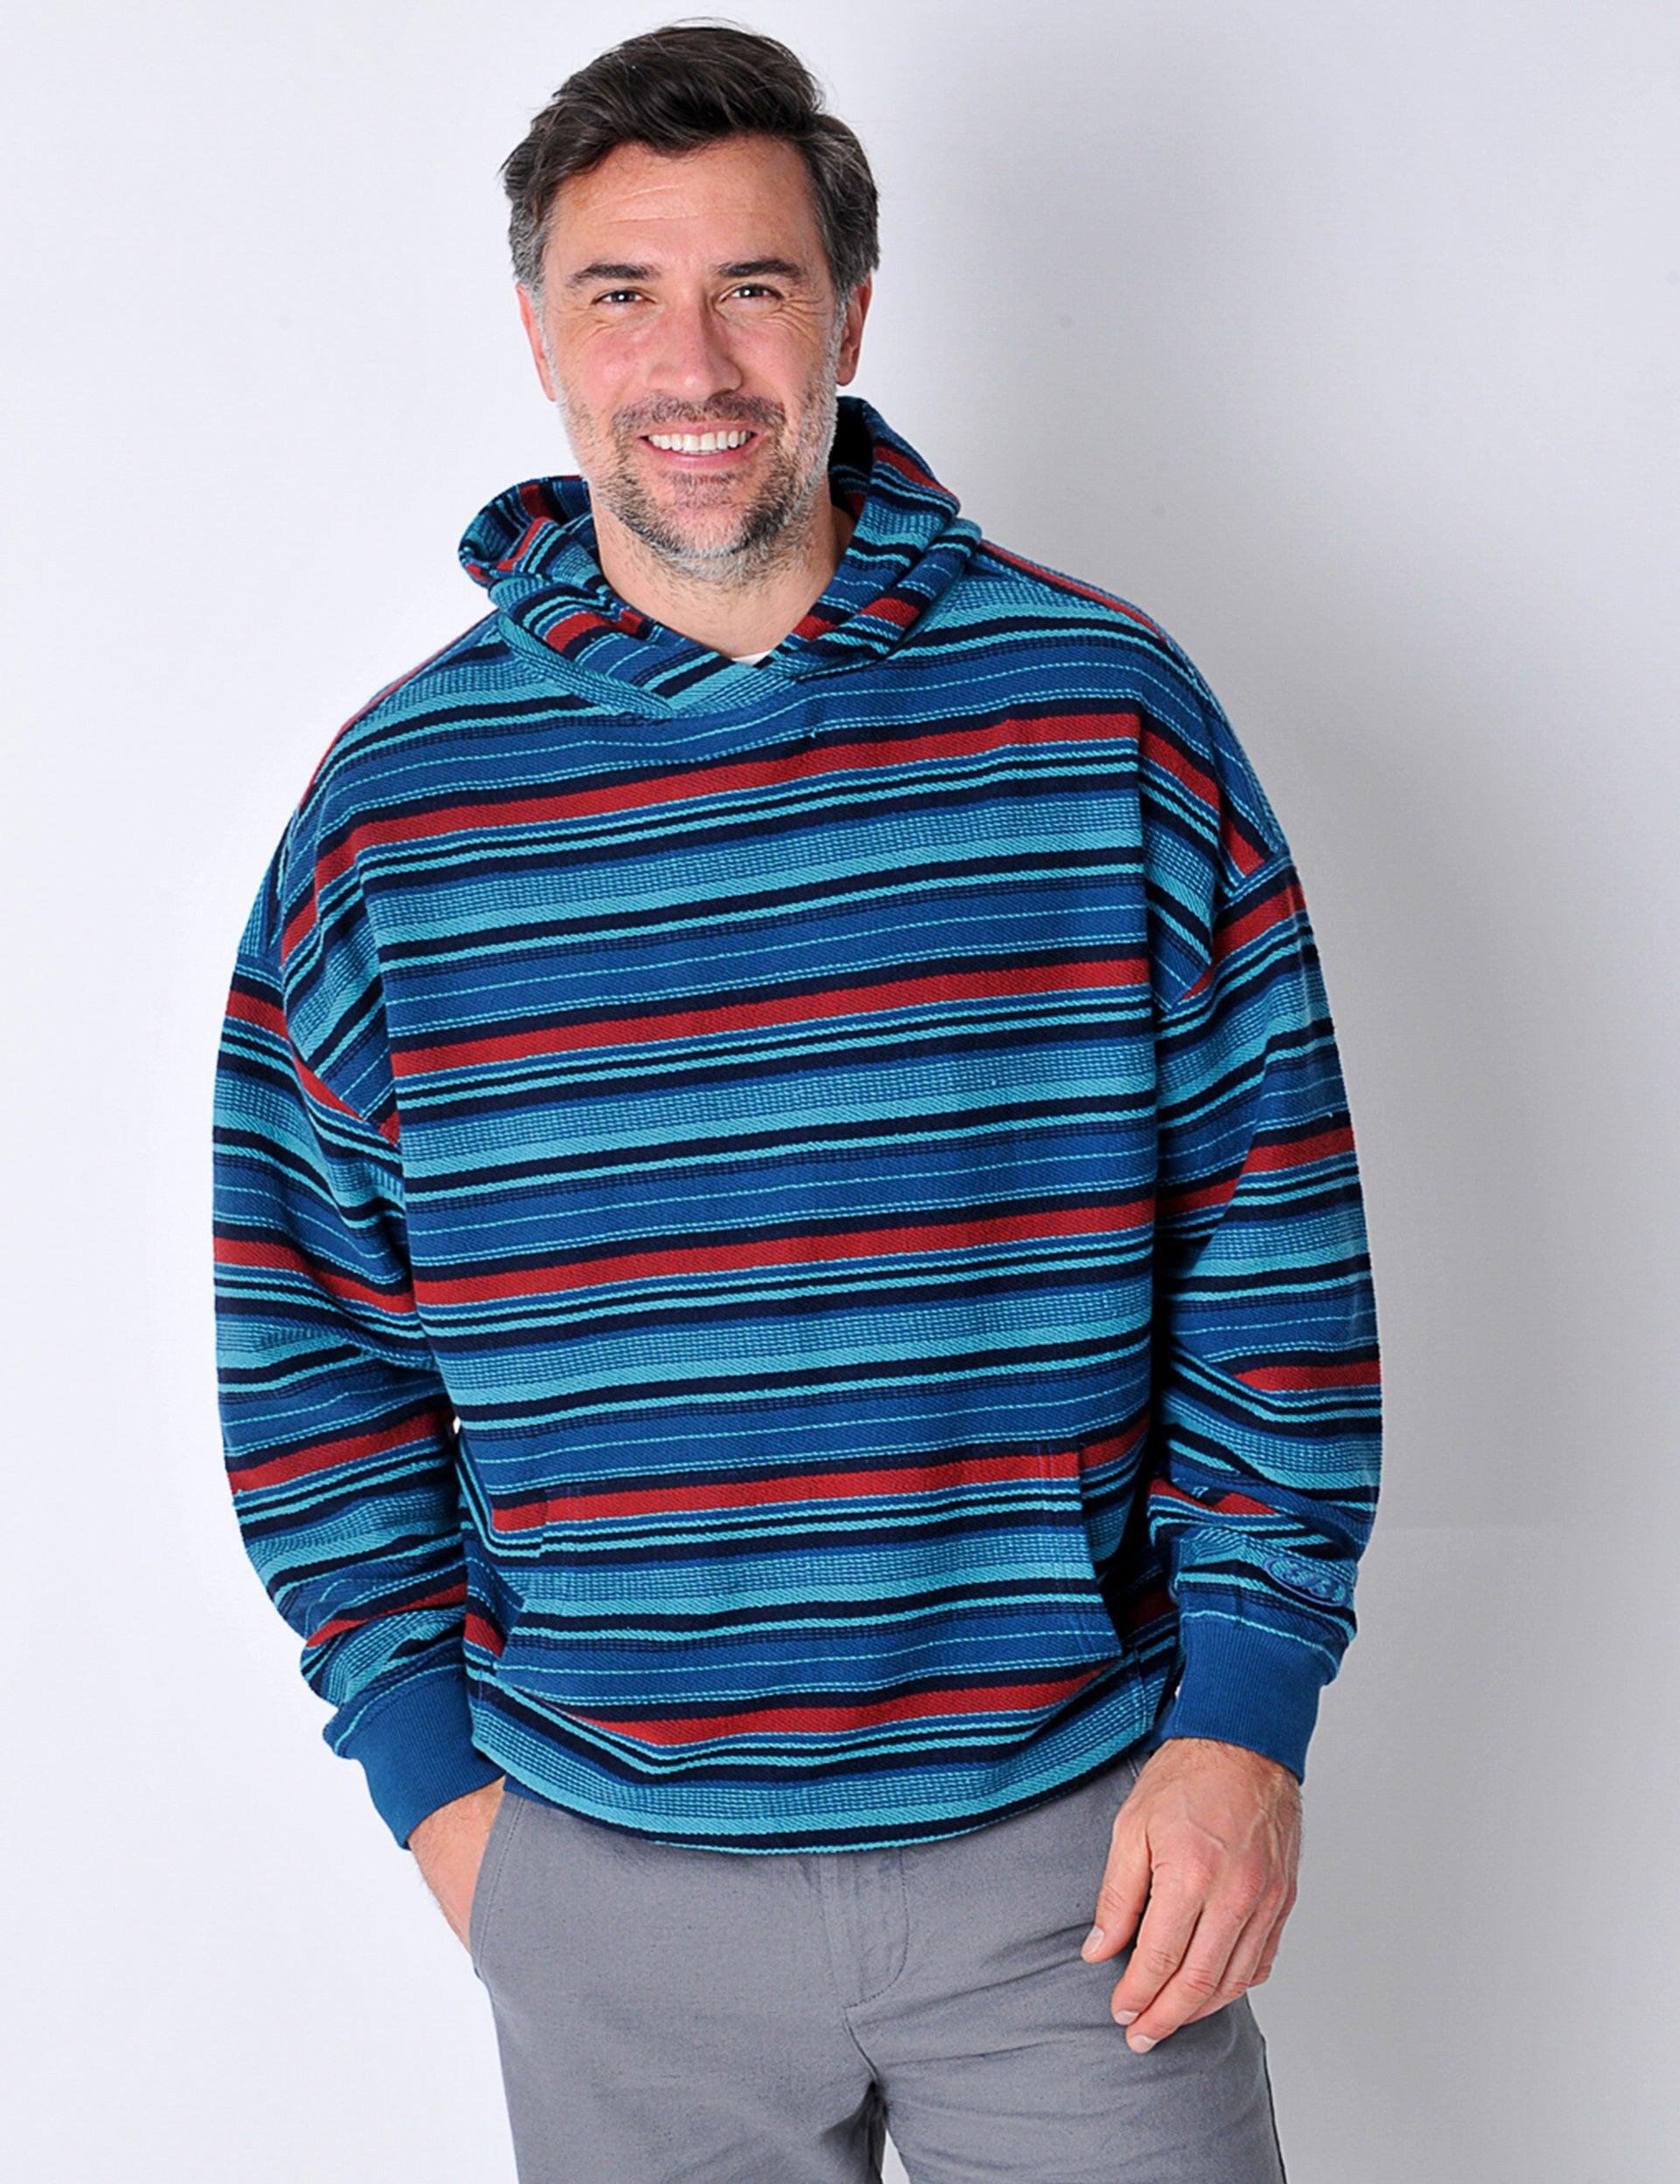 Berwick Sweatshirt Stripe by BURGS